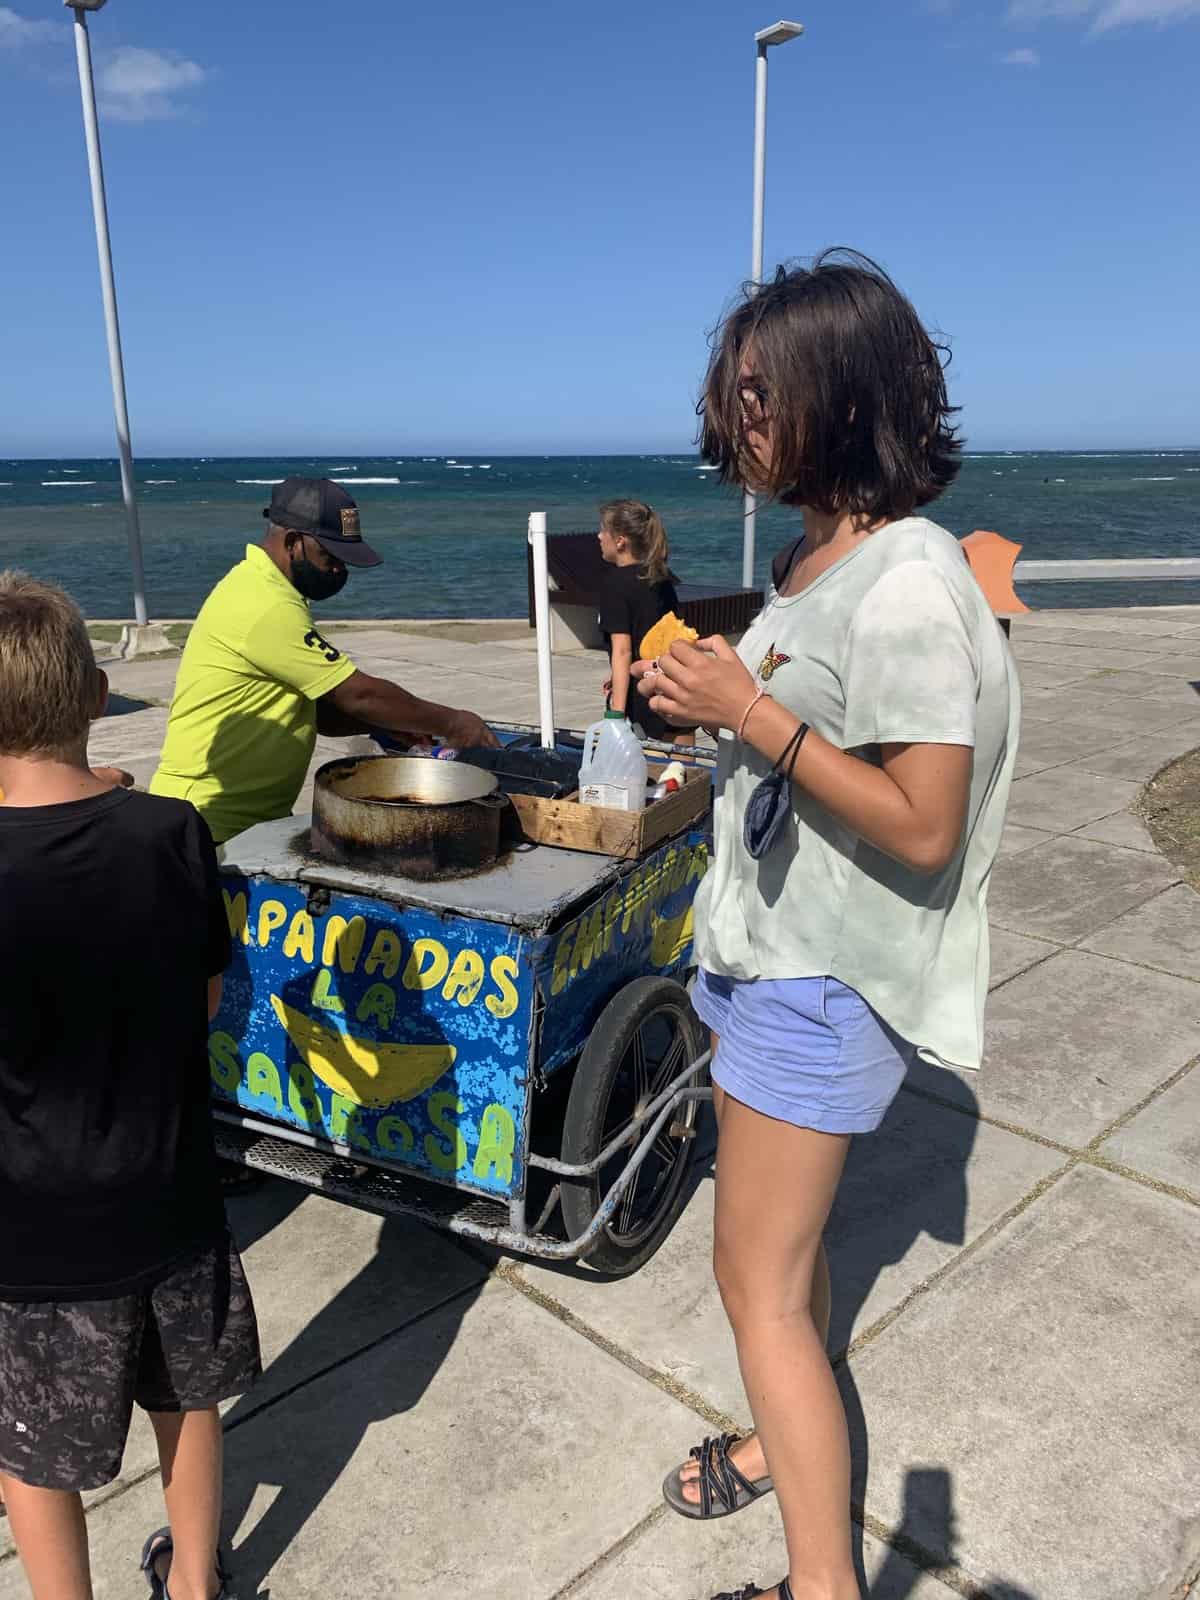 empanadas street food cart in Puerto Plata, Dominican Republic